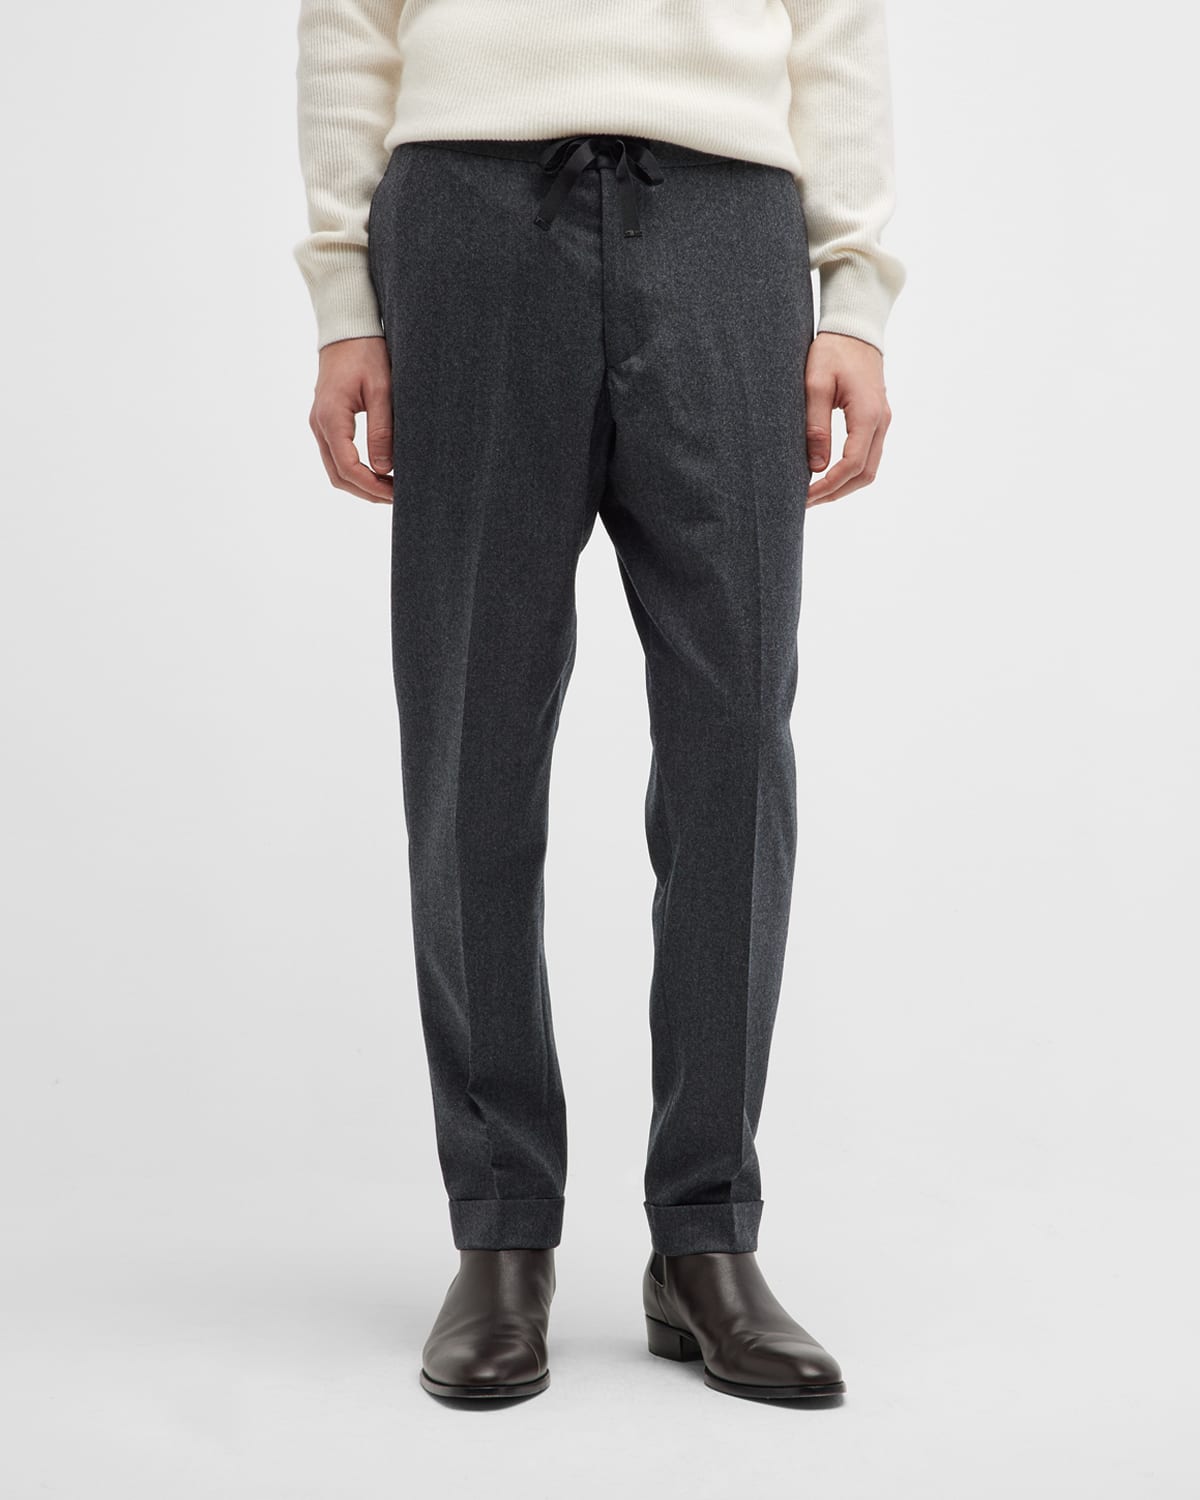 Zanella Men's Micro-Check Stretch Wool Dress Pants | Neiman Marcus